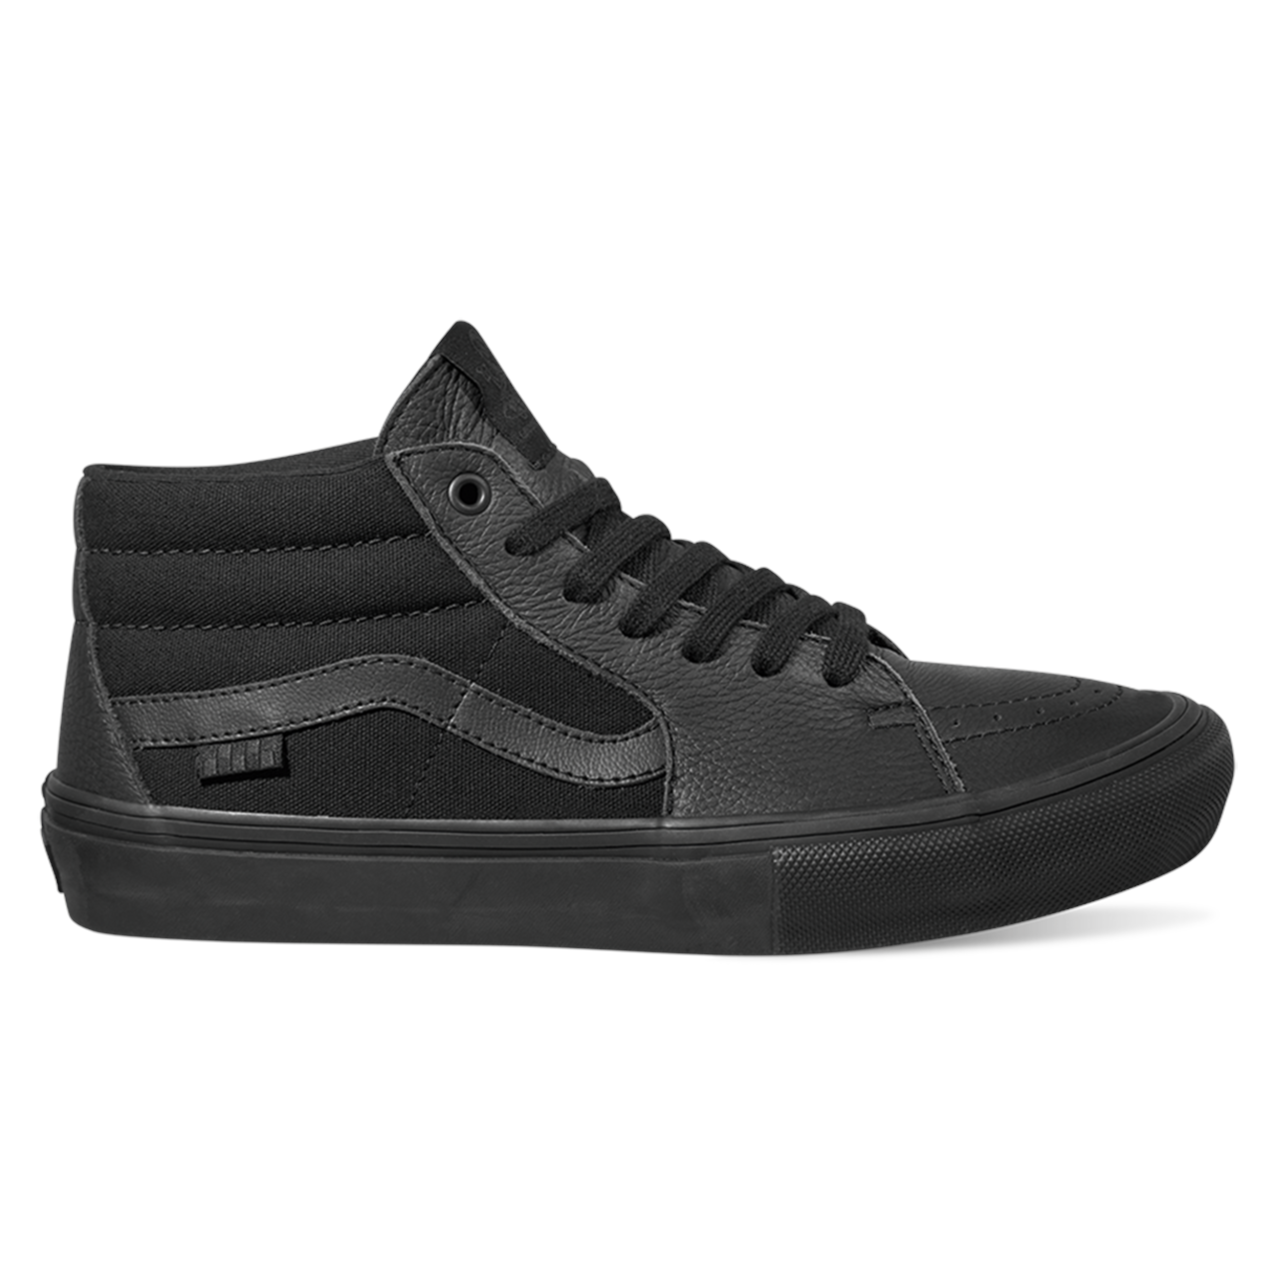 Black/Black Vans Skate Grosso Mid Skateboard Shoe